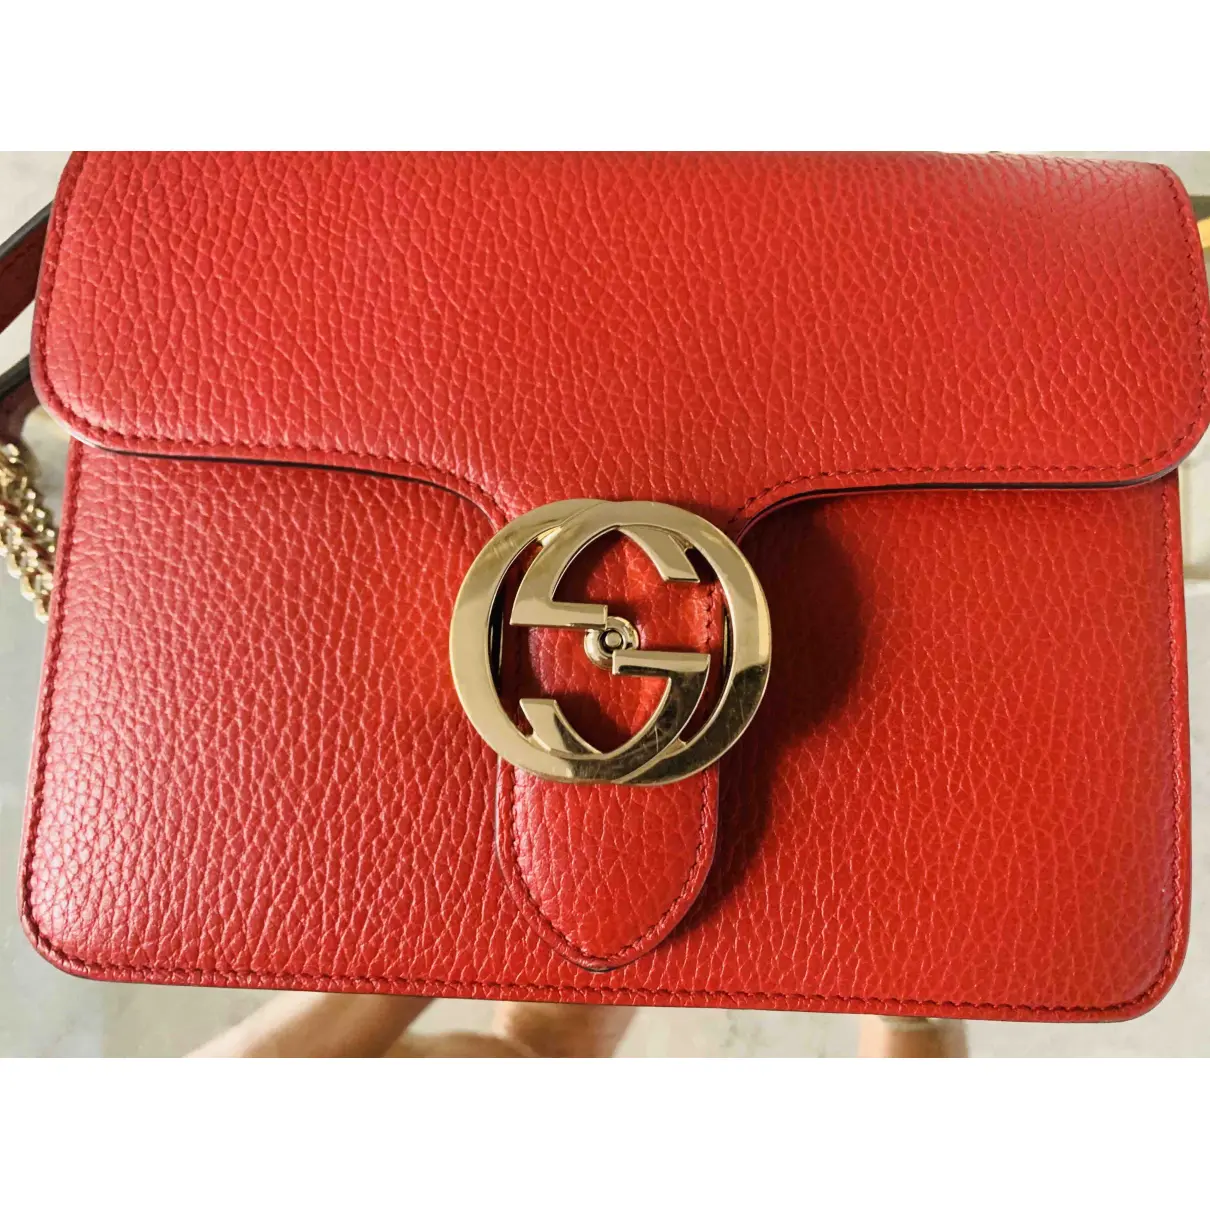 Buy Gucci Interlocking leather handbag online